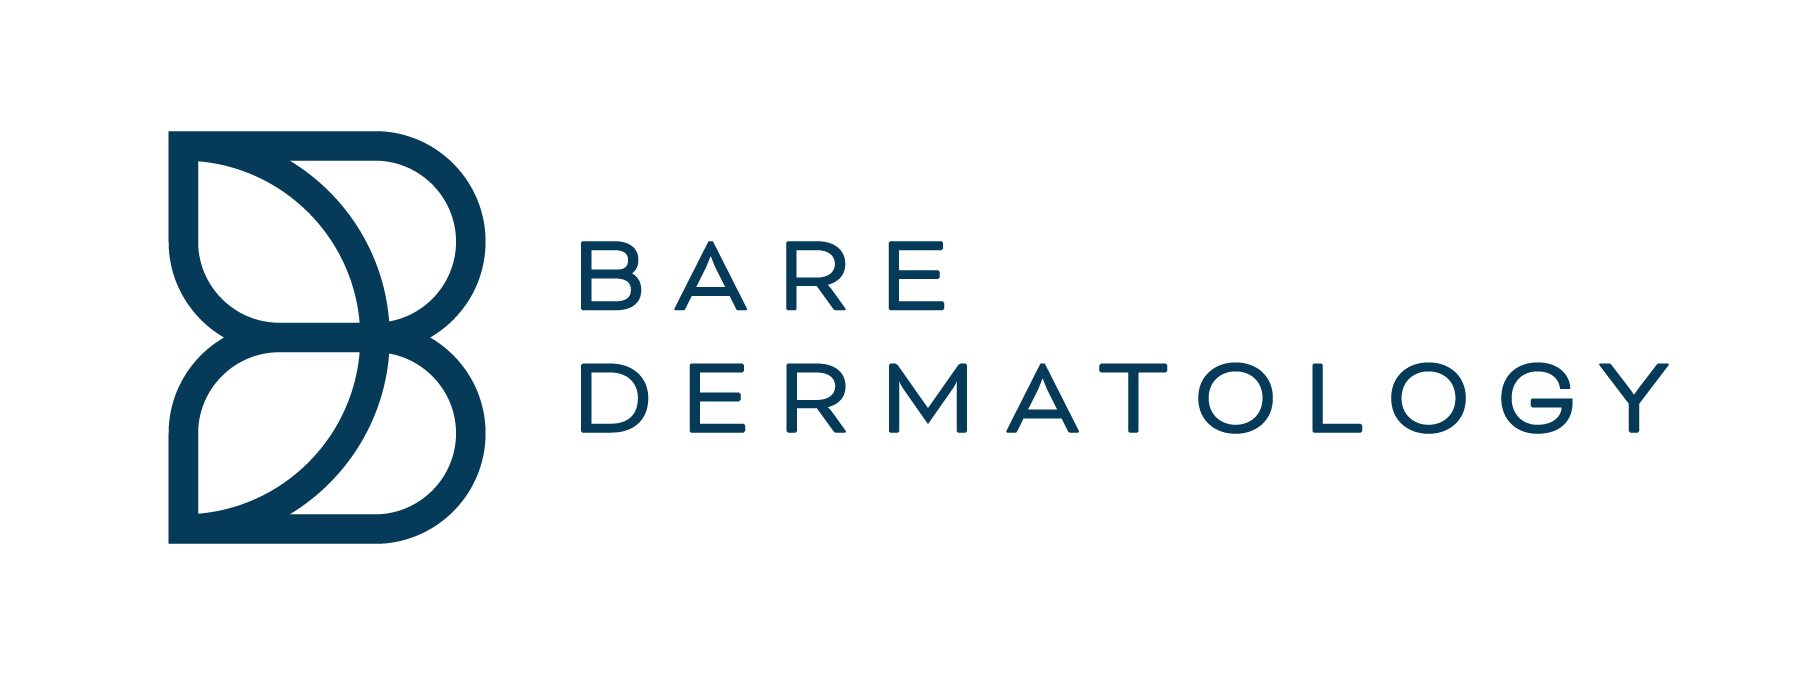 Bare Dermatology - Dermatologists in Allen, Aubrey, Dallas, Plano, Frisco, The Colony, Irving, Gainesville, Rockwall